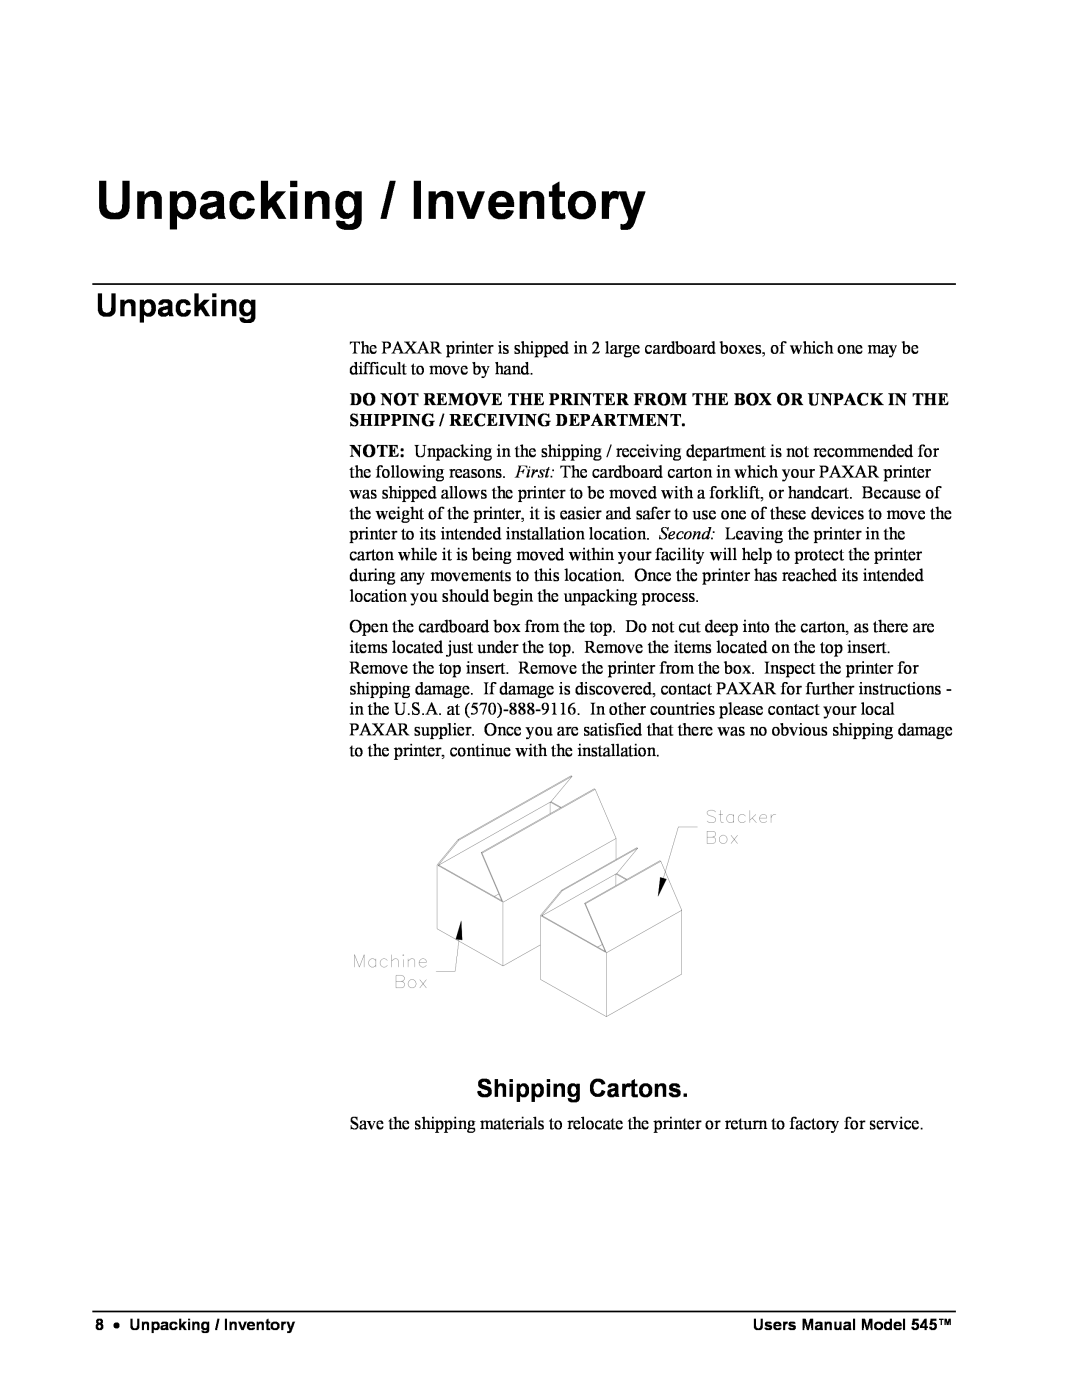 Paxar 545 user manual Unpacking / Inventory, Shipping Cartons 